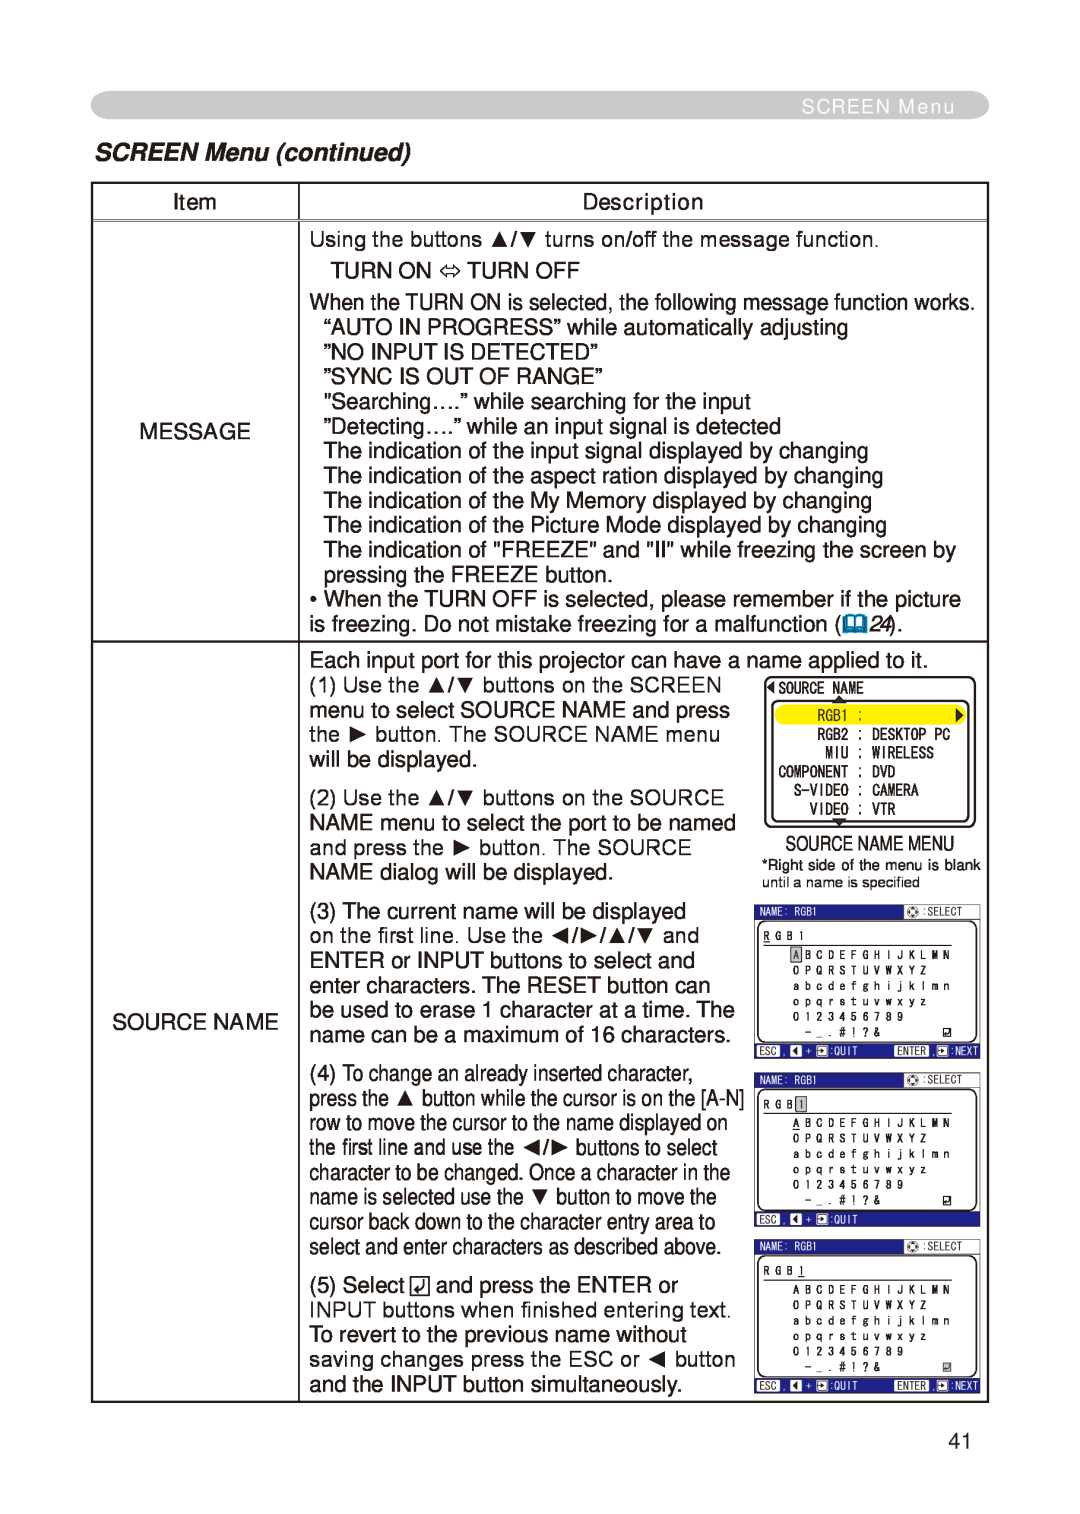 Hitachi CP-X268A user manual SCREEN Menu continued, Description, Message, Source Name 